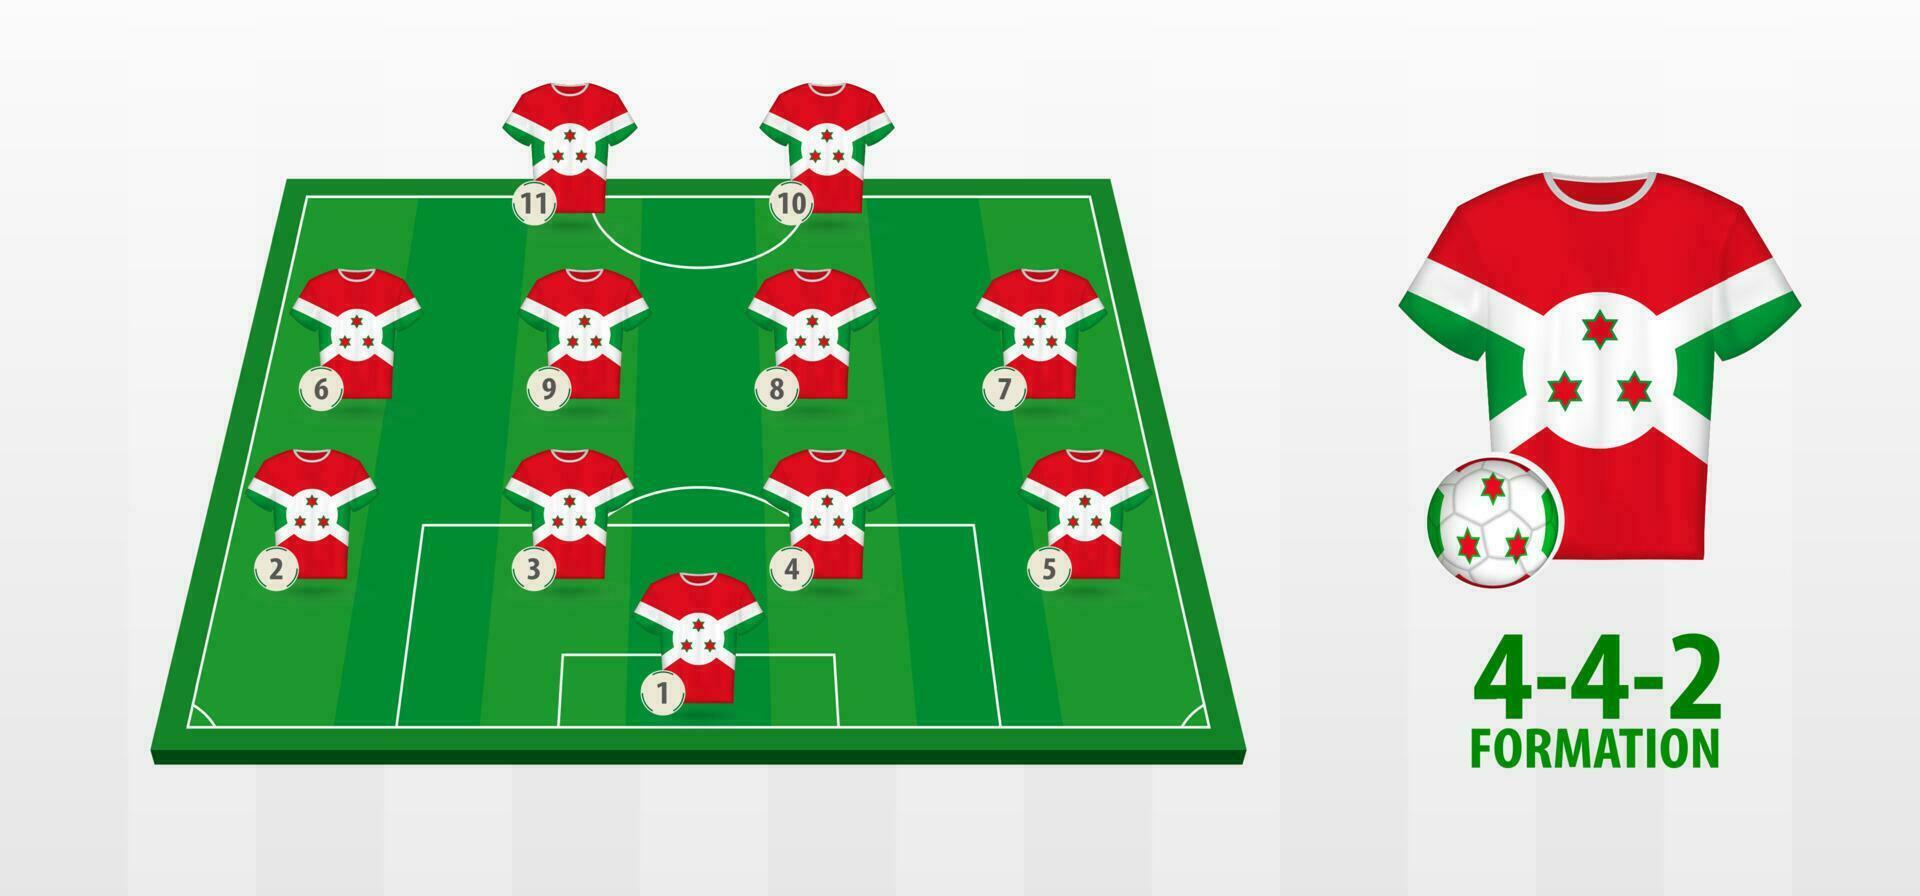 Burundi National Football Team Formation on Football Field. vector